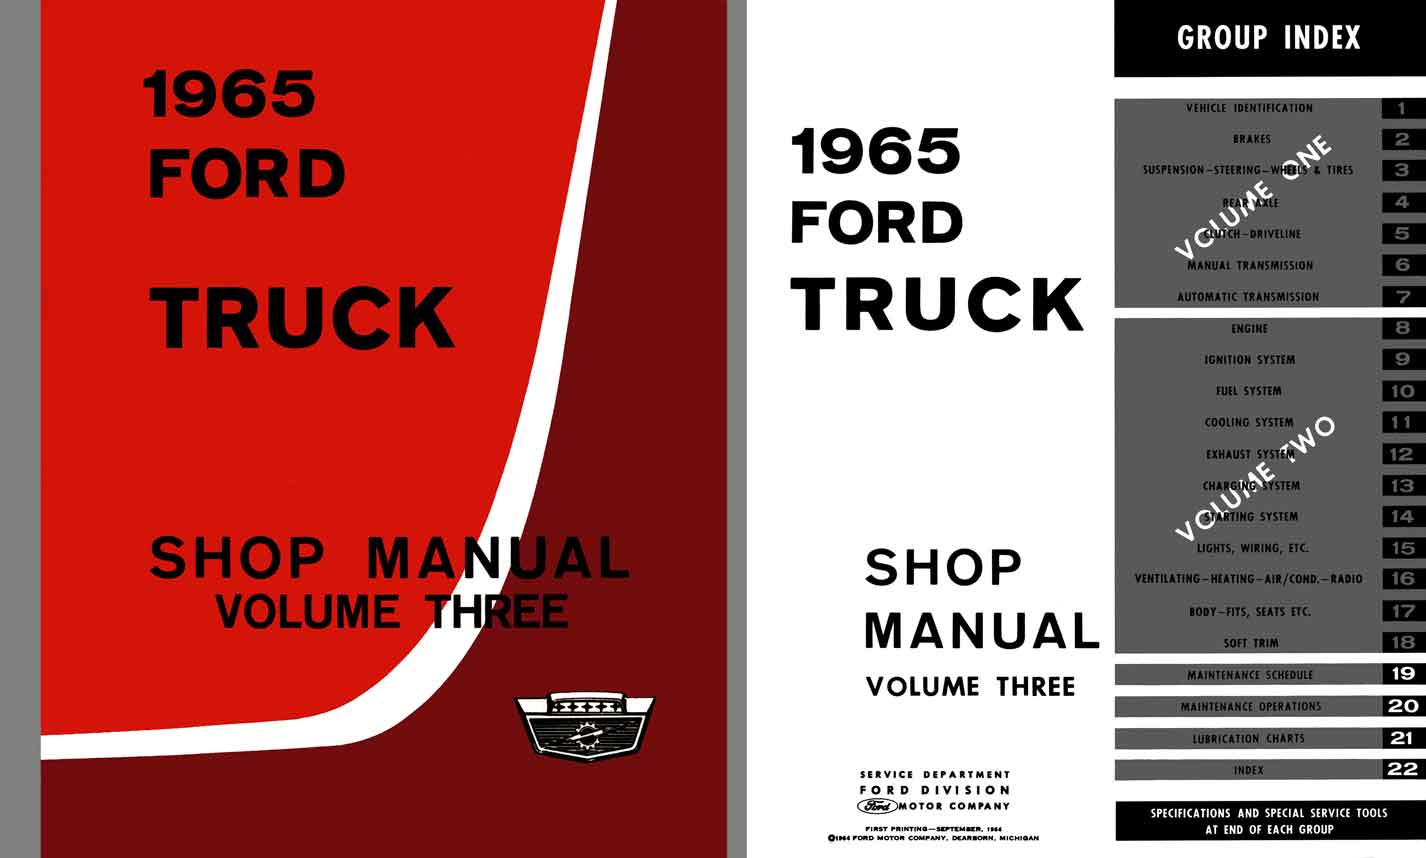 Ford Truck 1965 - Shop Manual Volume Three